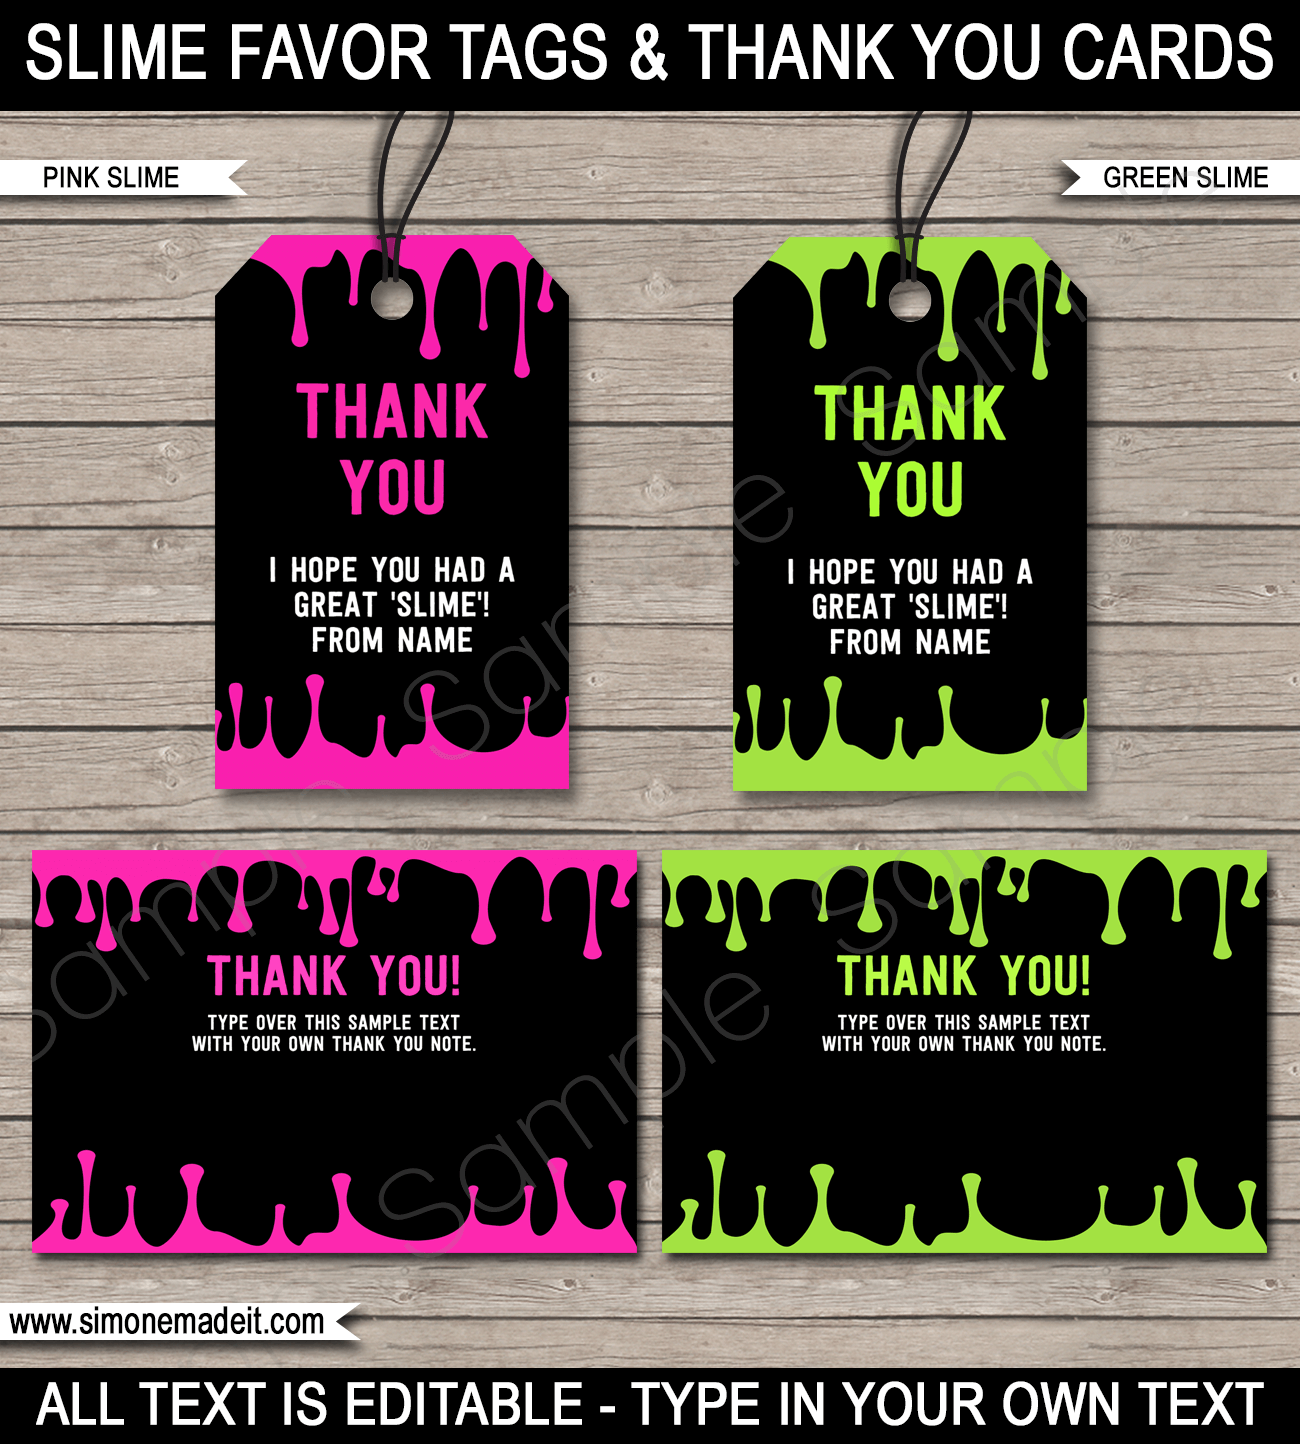 Slime Theme Birthday Party Favor Tags & Thank You Cards | Editable & Printable DIY Templates